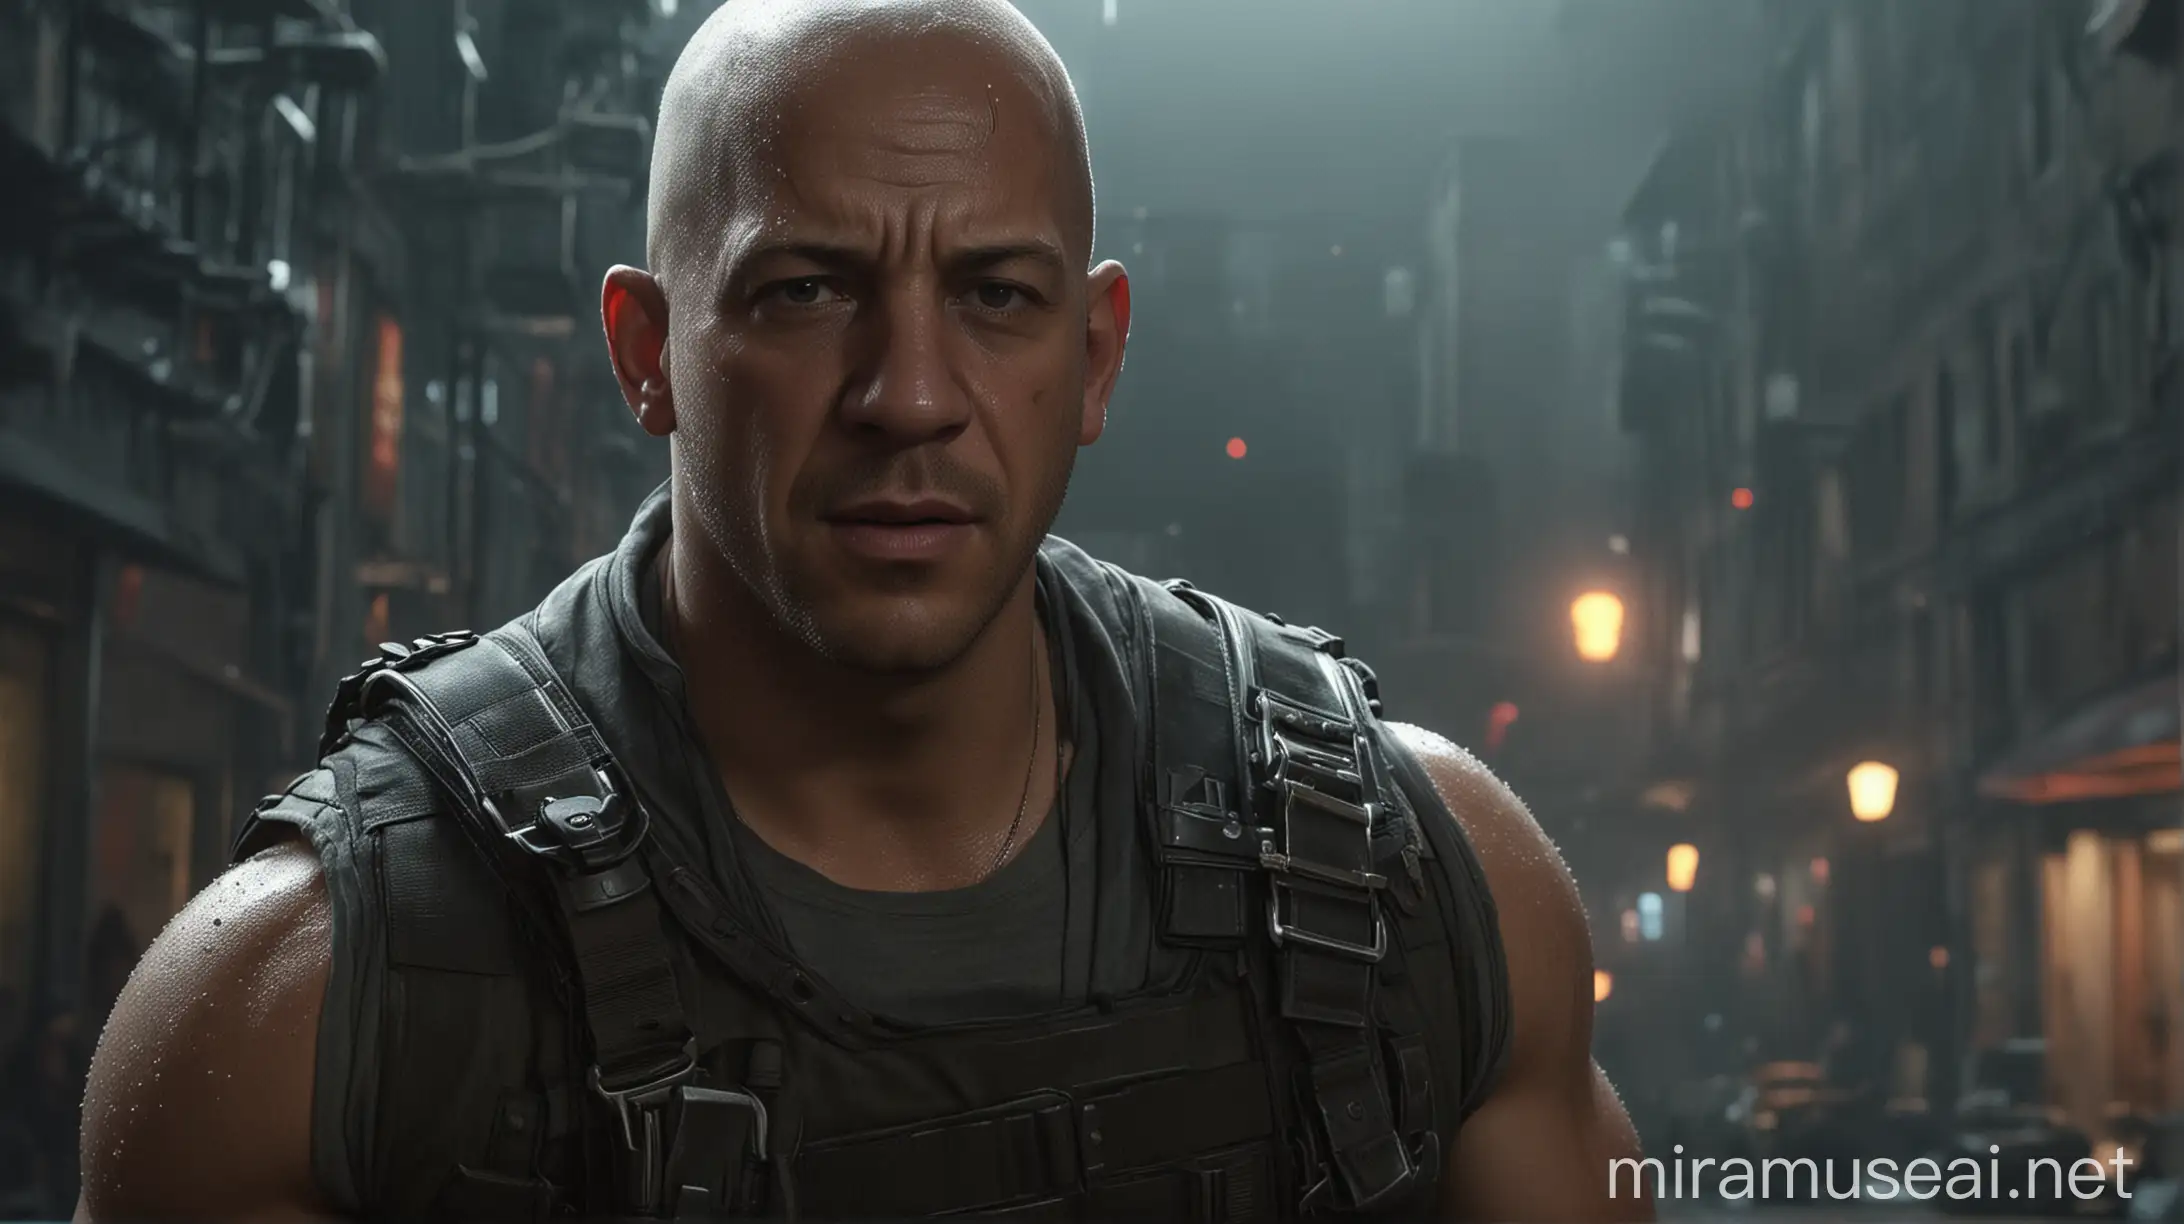 Intense Vin Diesel in Tactical Outfit Under Cinematic Spotlight